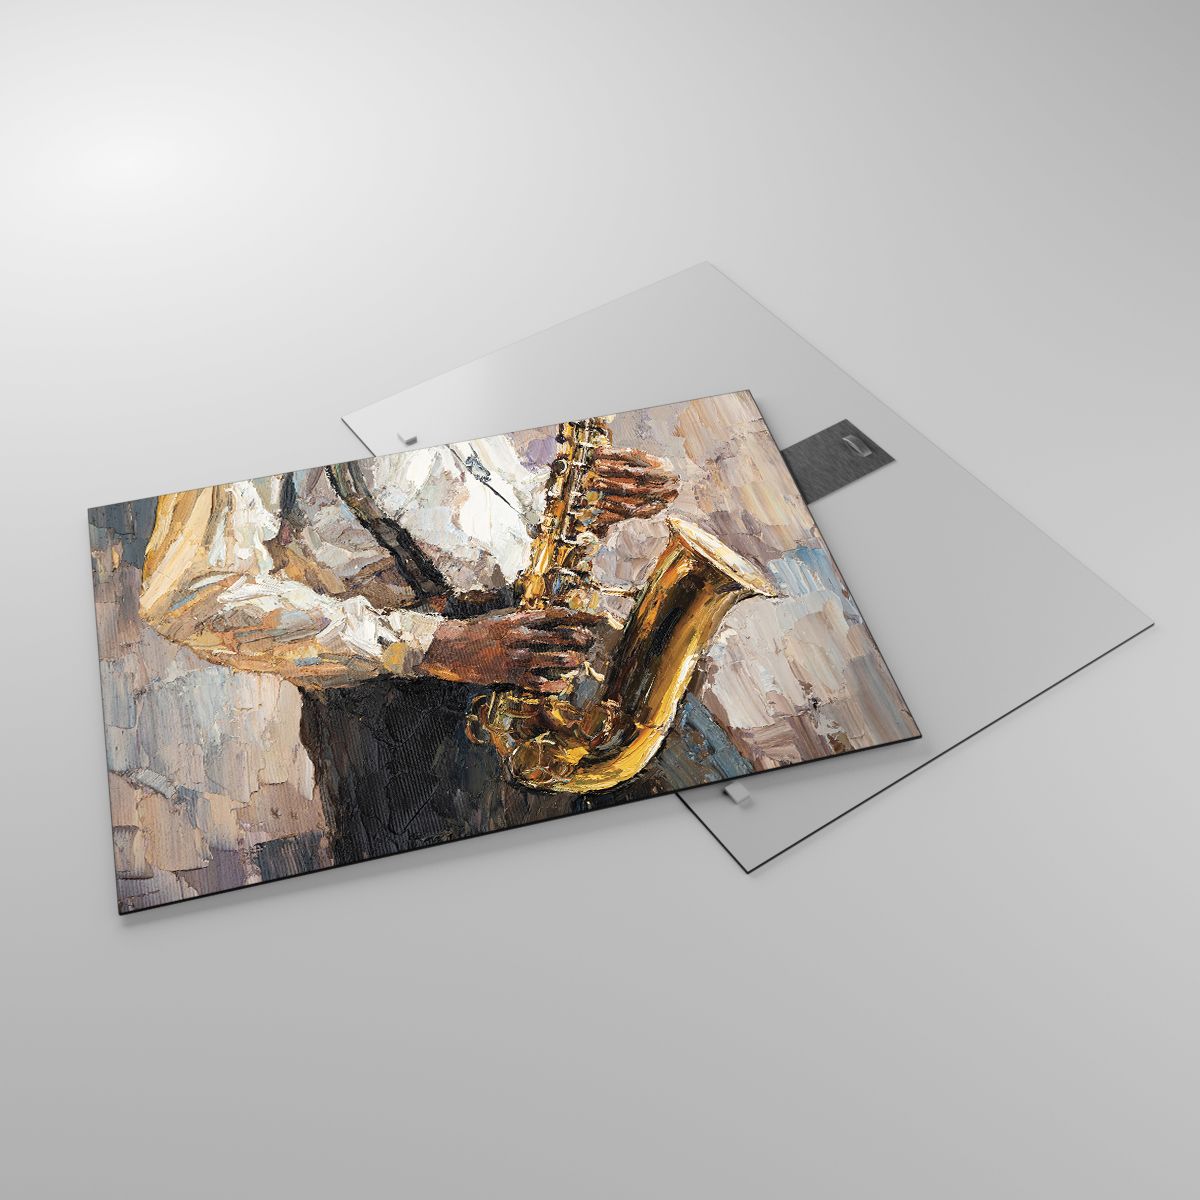 Impression Saxophone, Impression Musique, Impression Peinture, Impression Le Jazz, Impression Culture